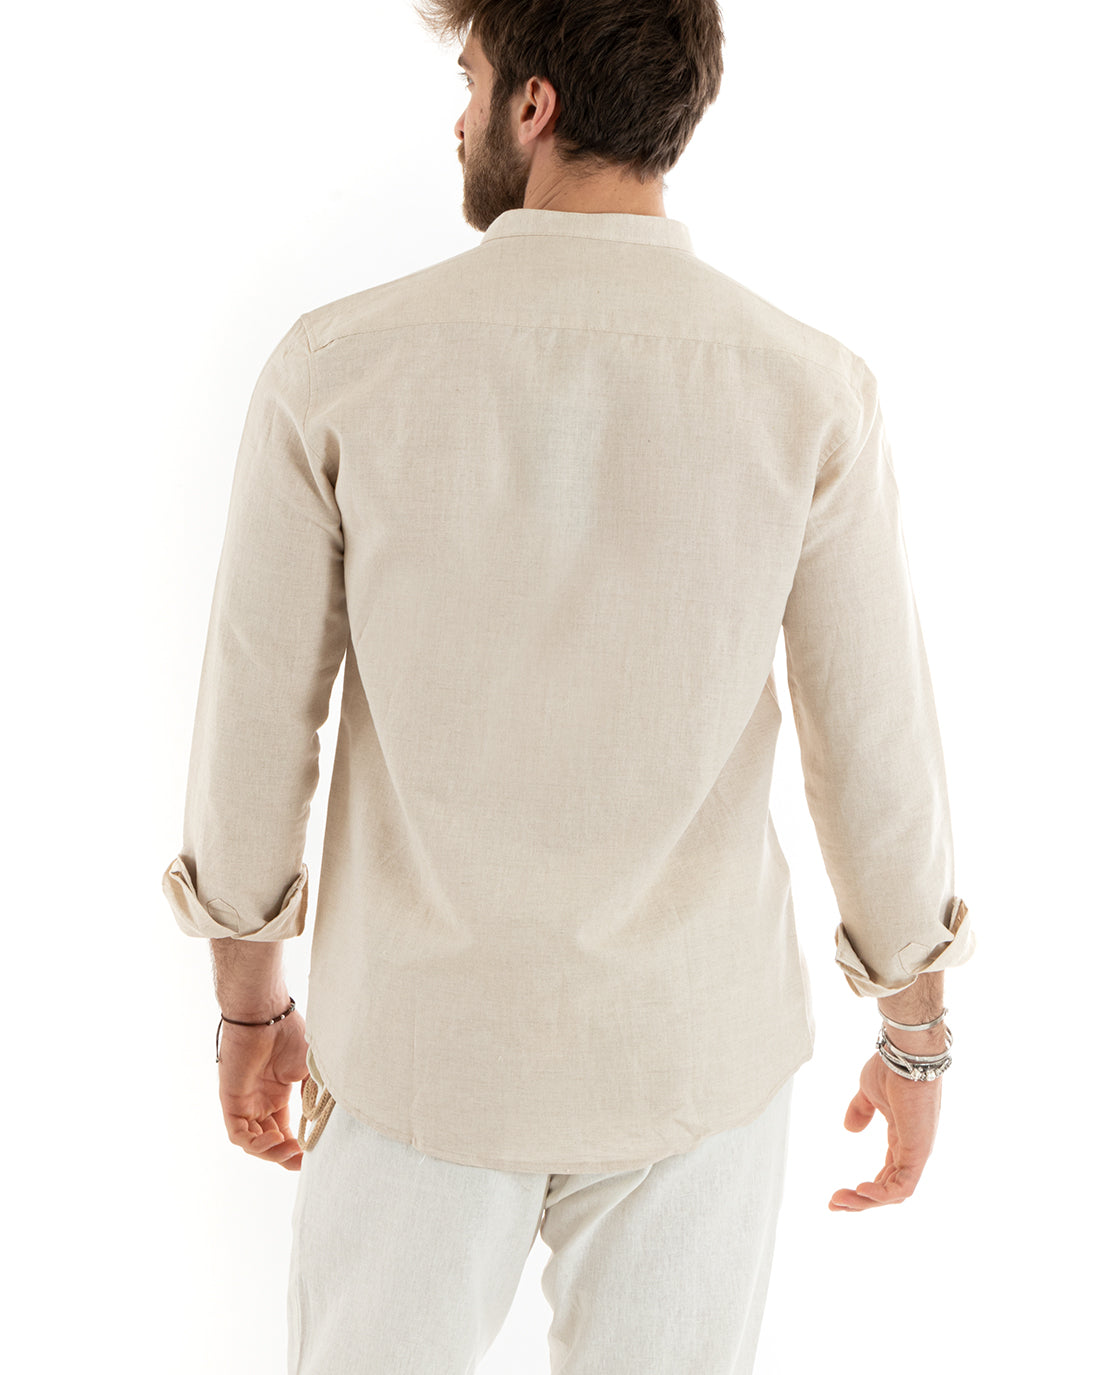 Men's Mandarin Collar Shirt Long Sleeve Linen Solid Color Tailored Beige GIOSAL-C2675A